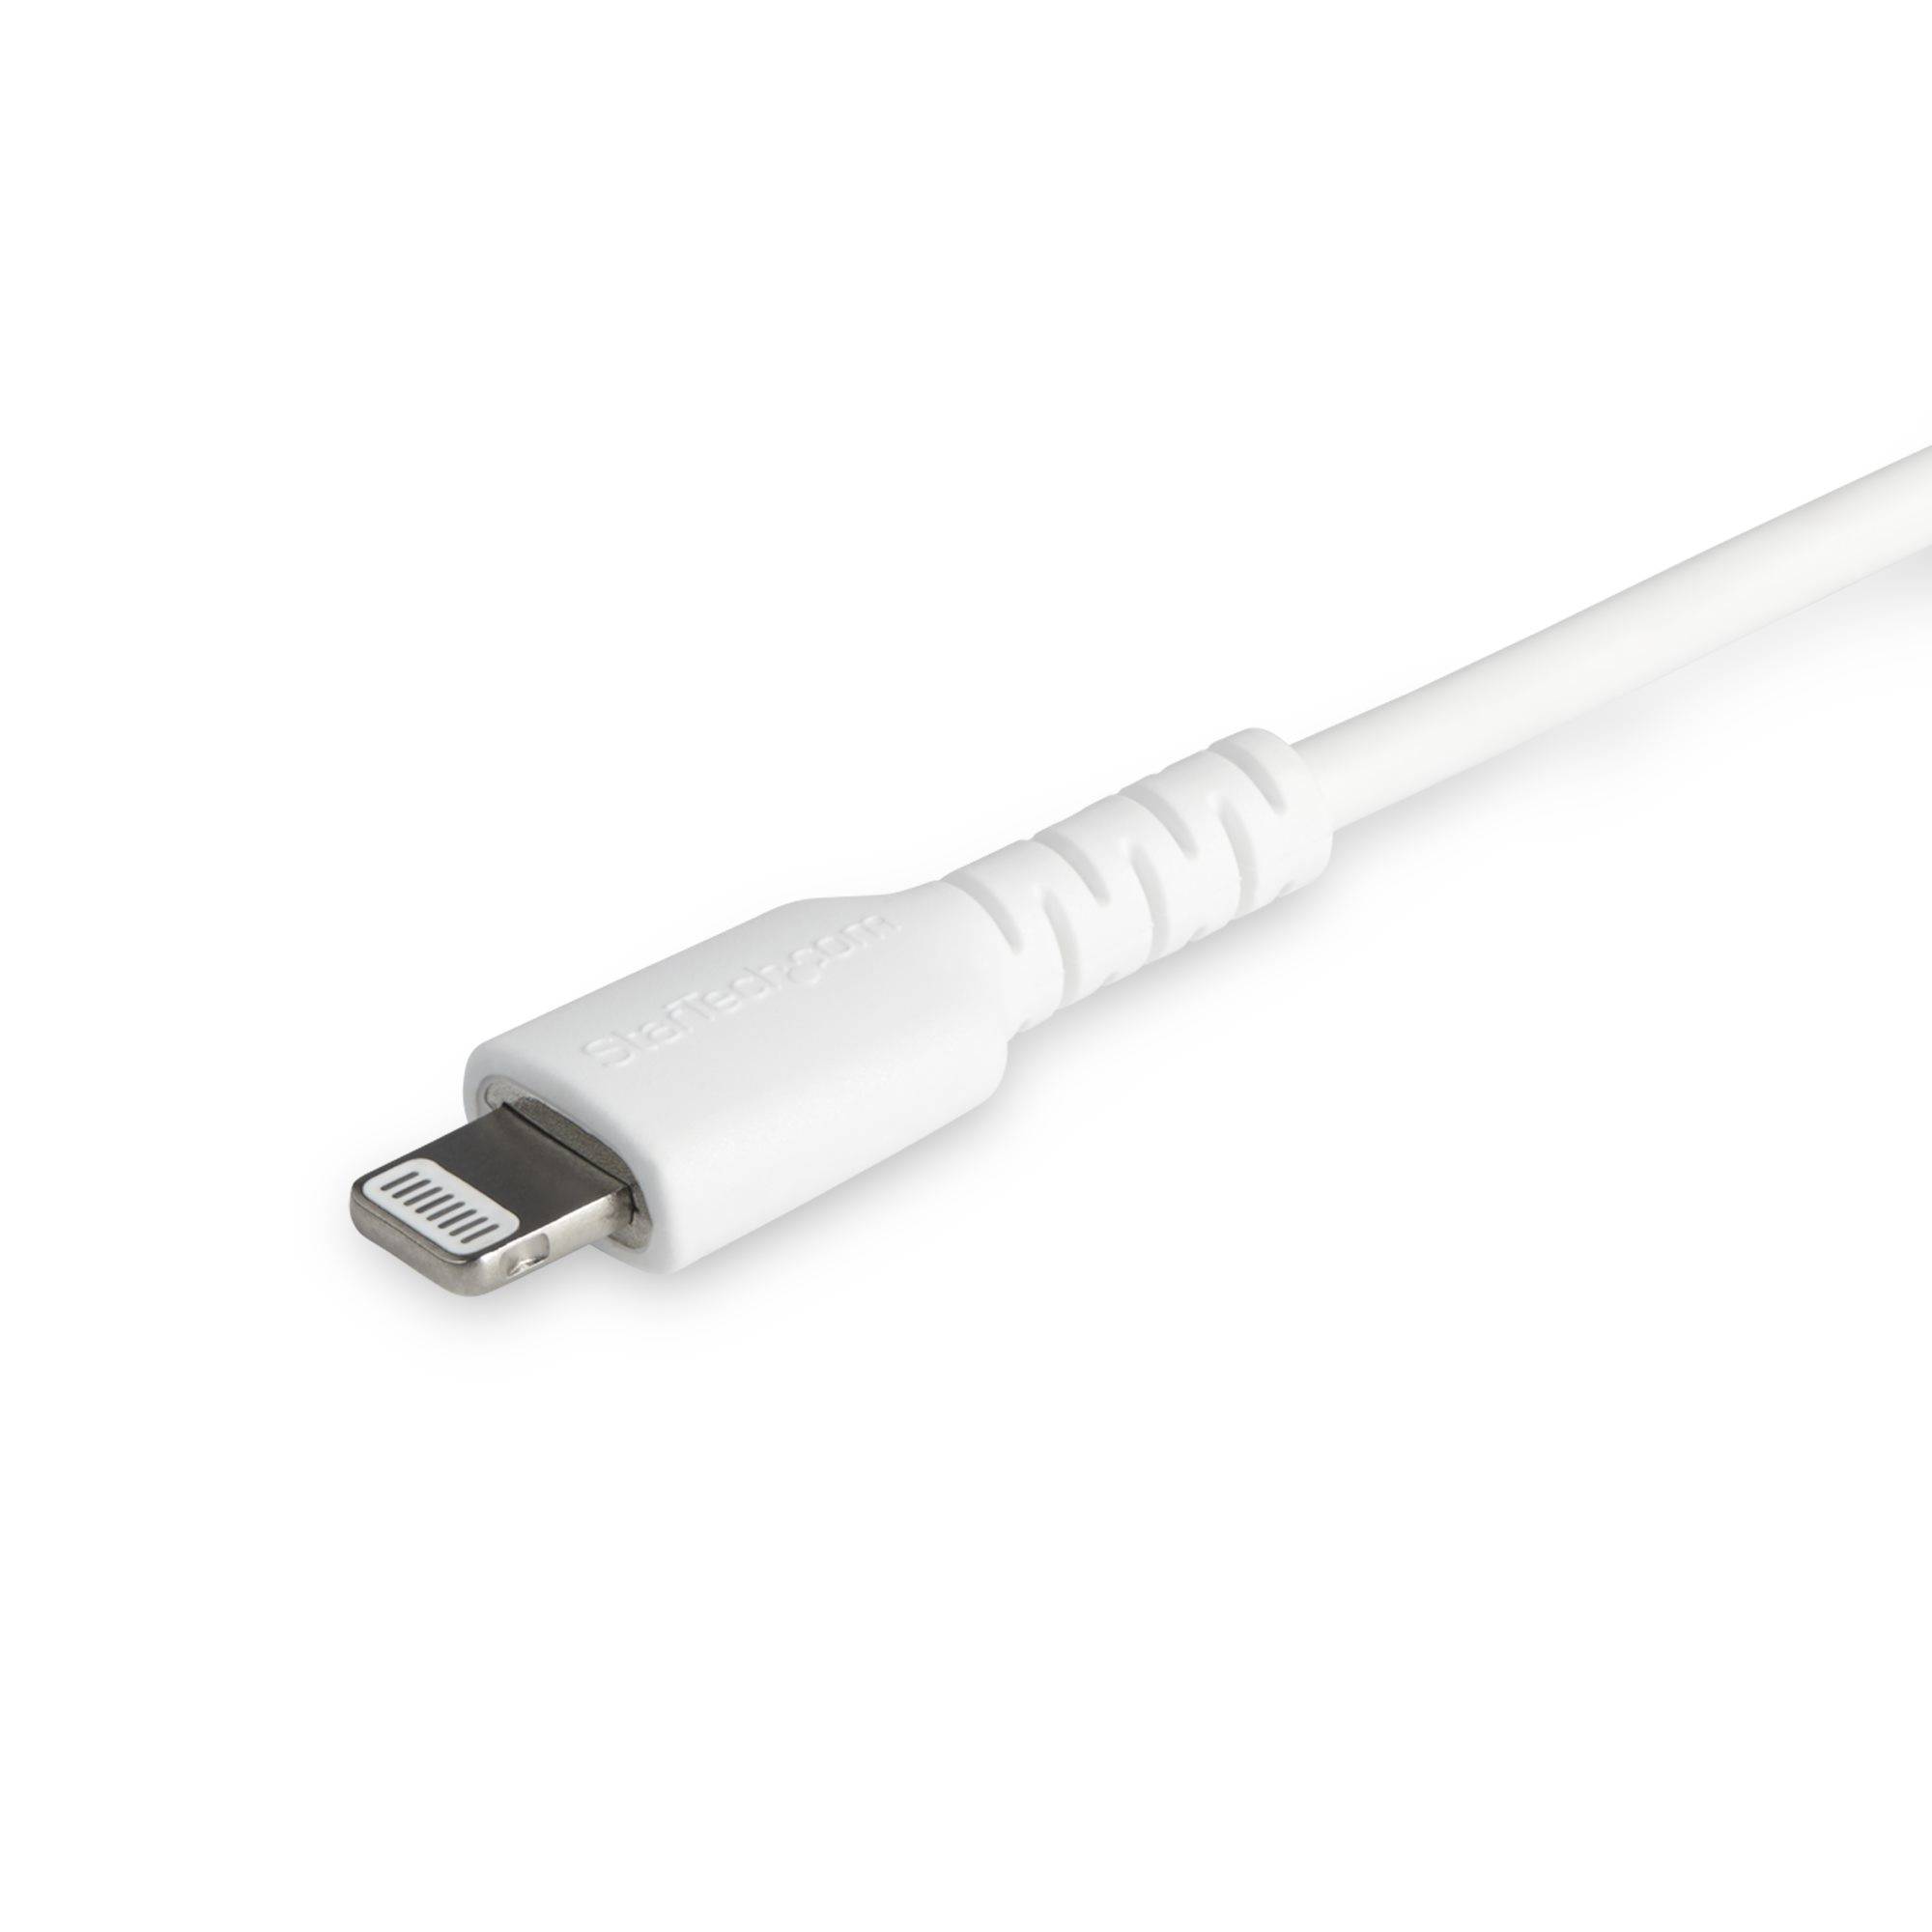 Rca Informatique - image du produit : 1M USB C TO LIGHTNING CABLE WHITE - ARAMID FIBER